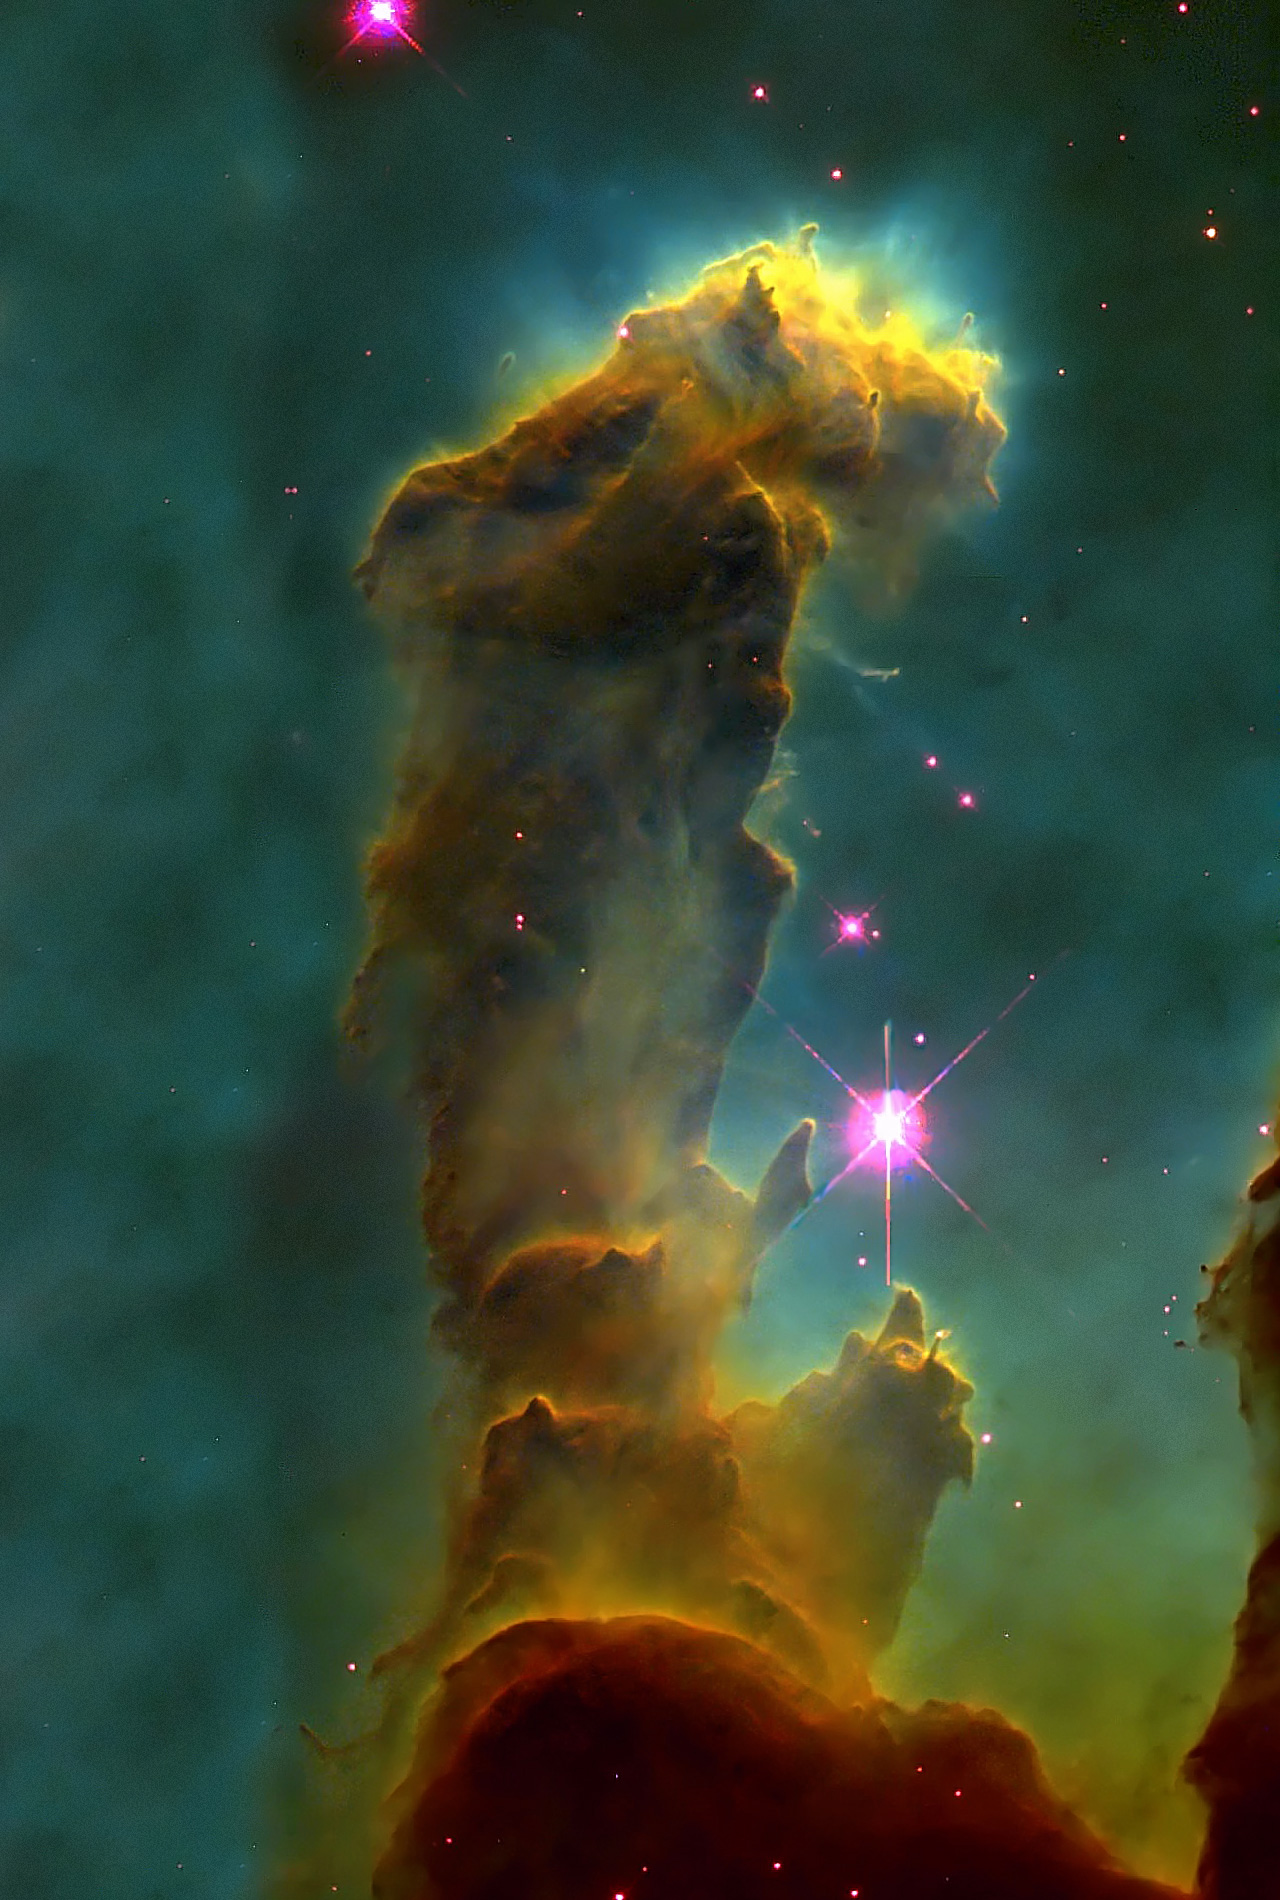 For Eagle Nebula Wallpaper 1080p Displaying Image